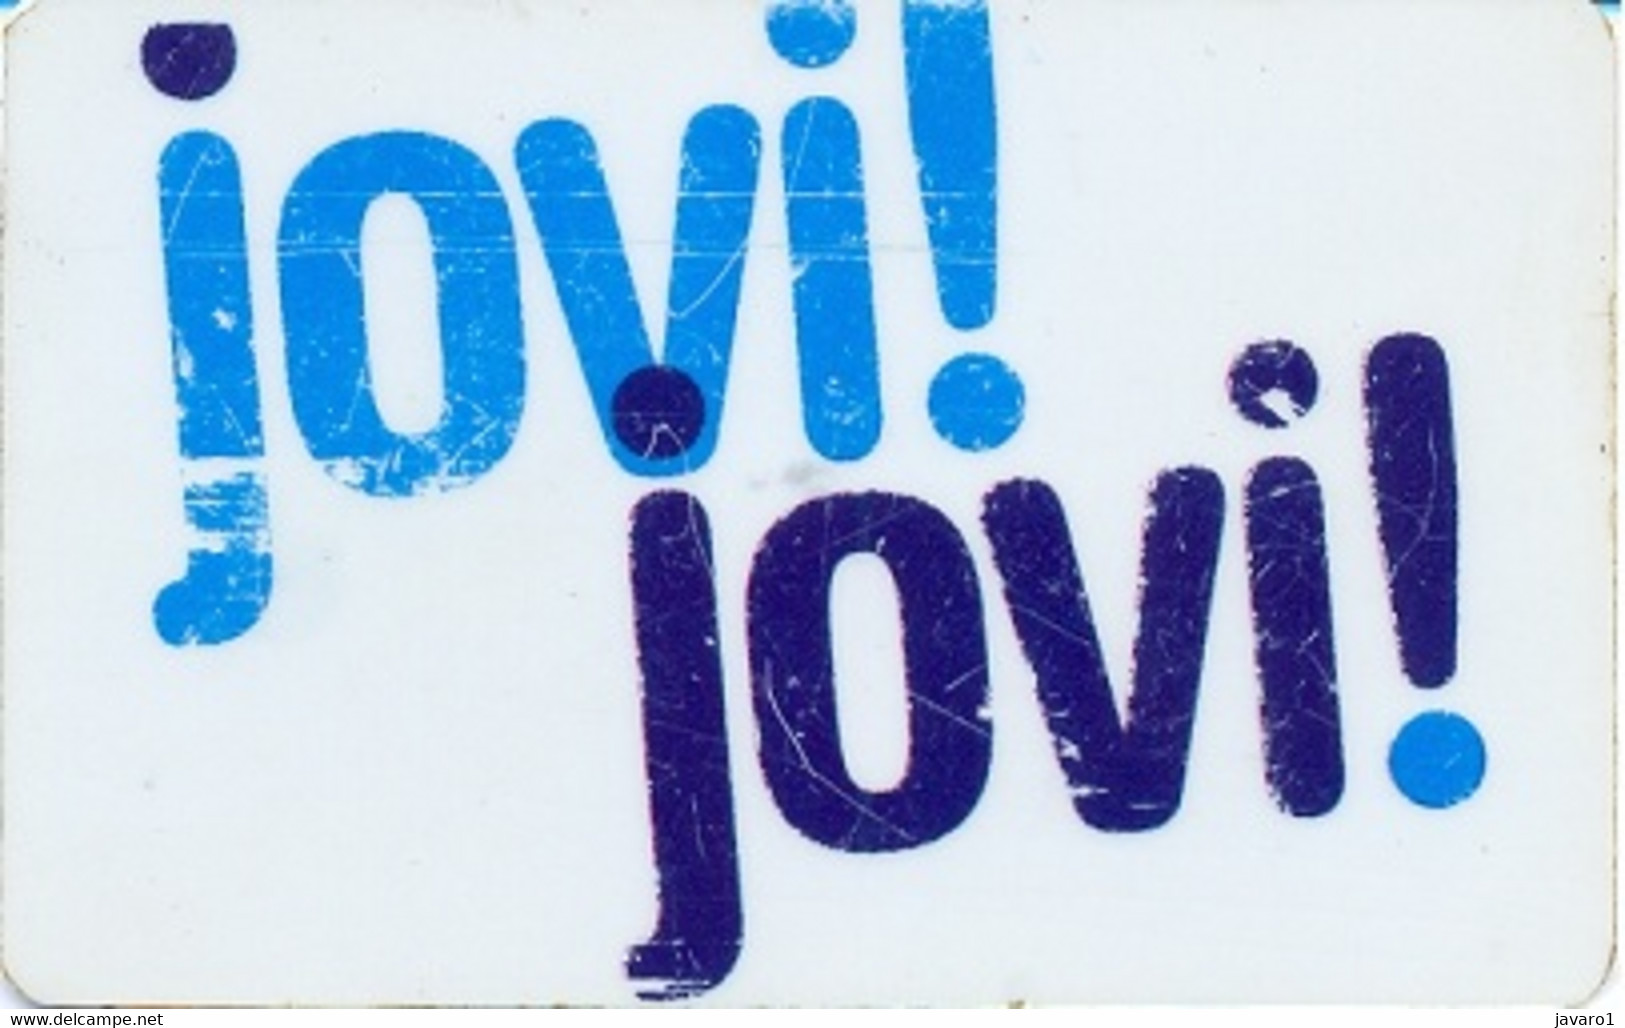 BELARUS : BLR149 ???u Jovi! Jovi! Sticker On Card USED Exp: 03.2002 - Wit-Rusland